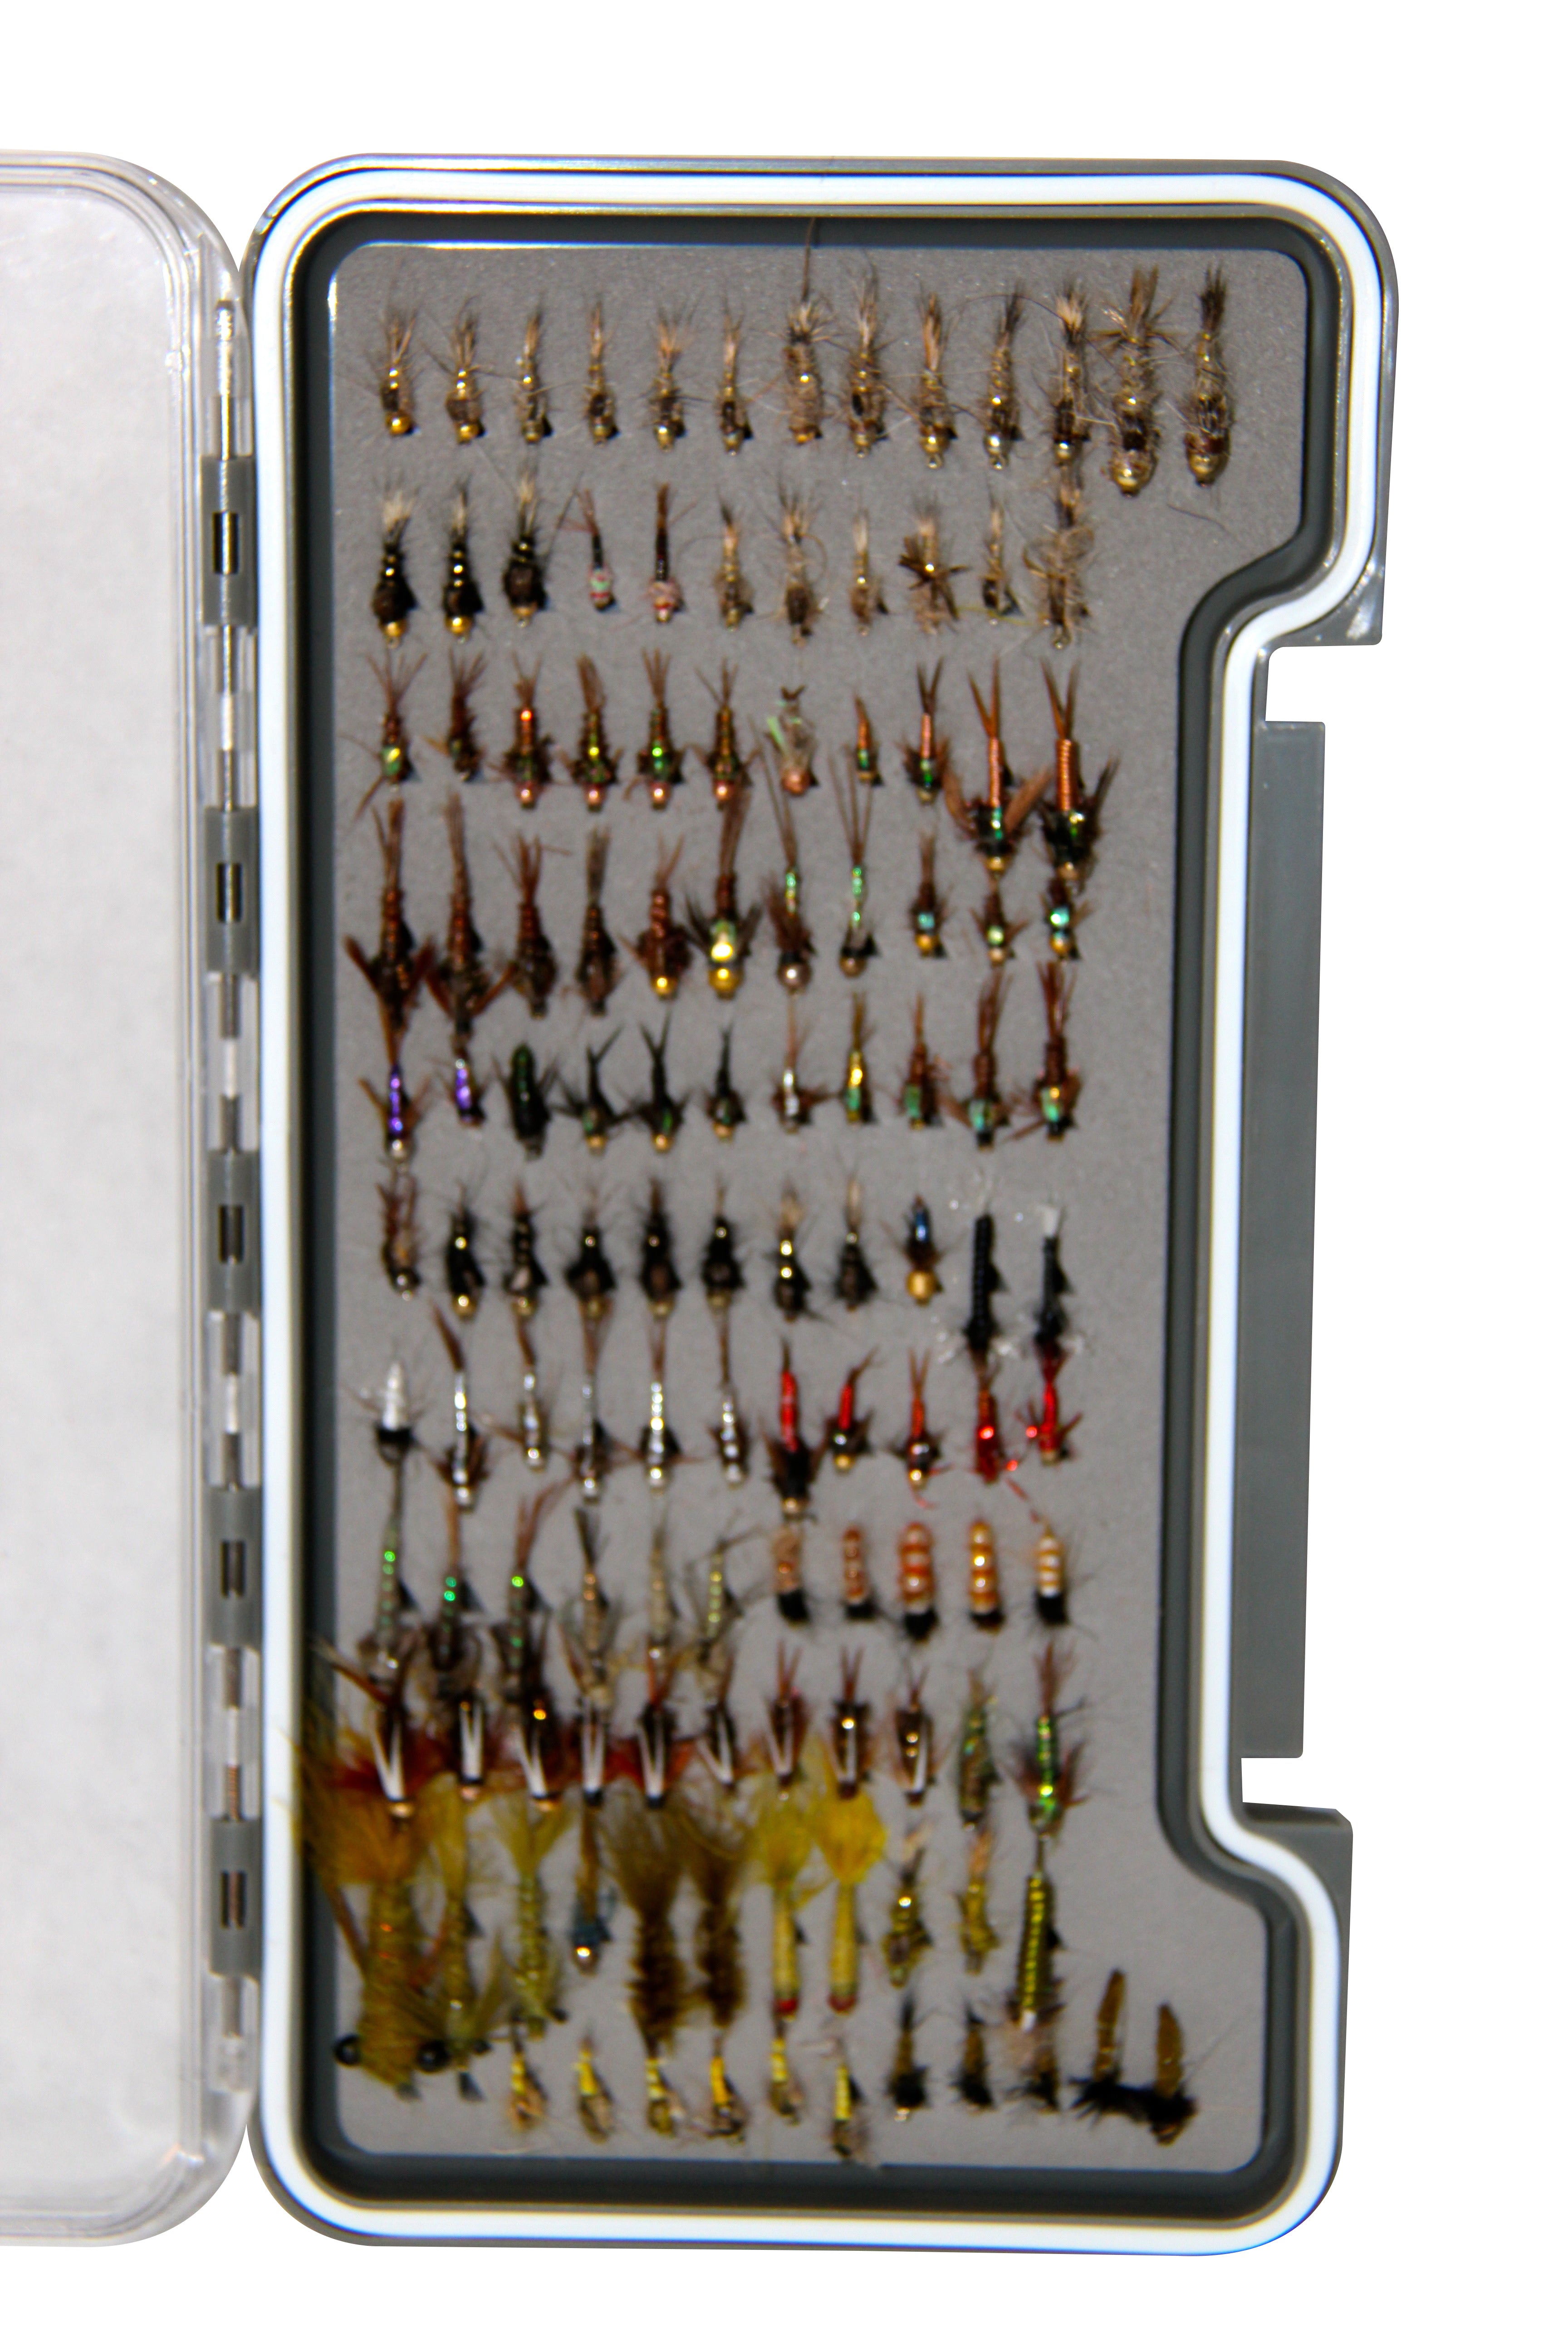 Useful Fishing Fly Box Fish Slim Storage. Transparent Waterproof Fishing